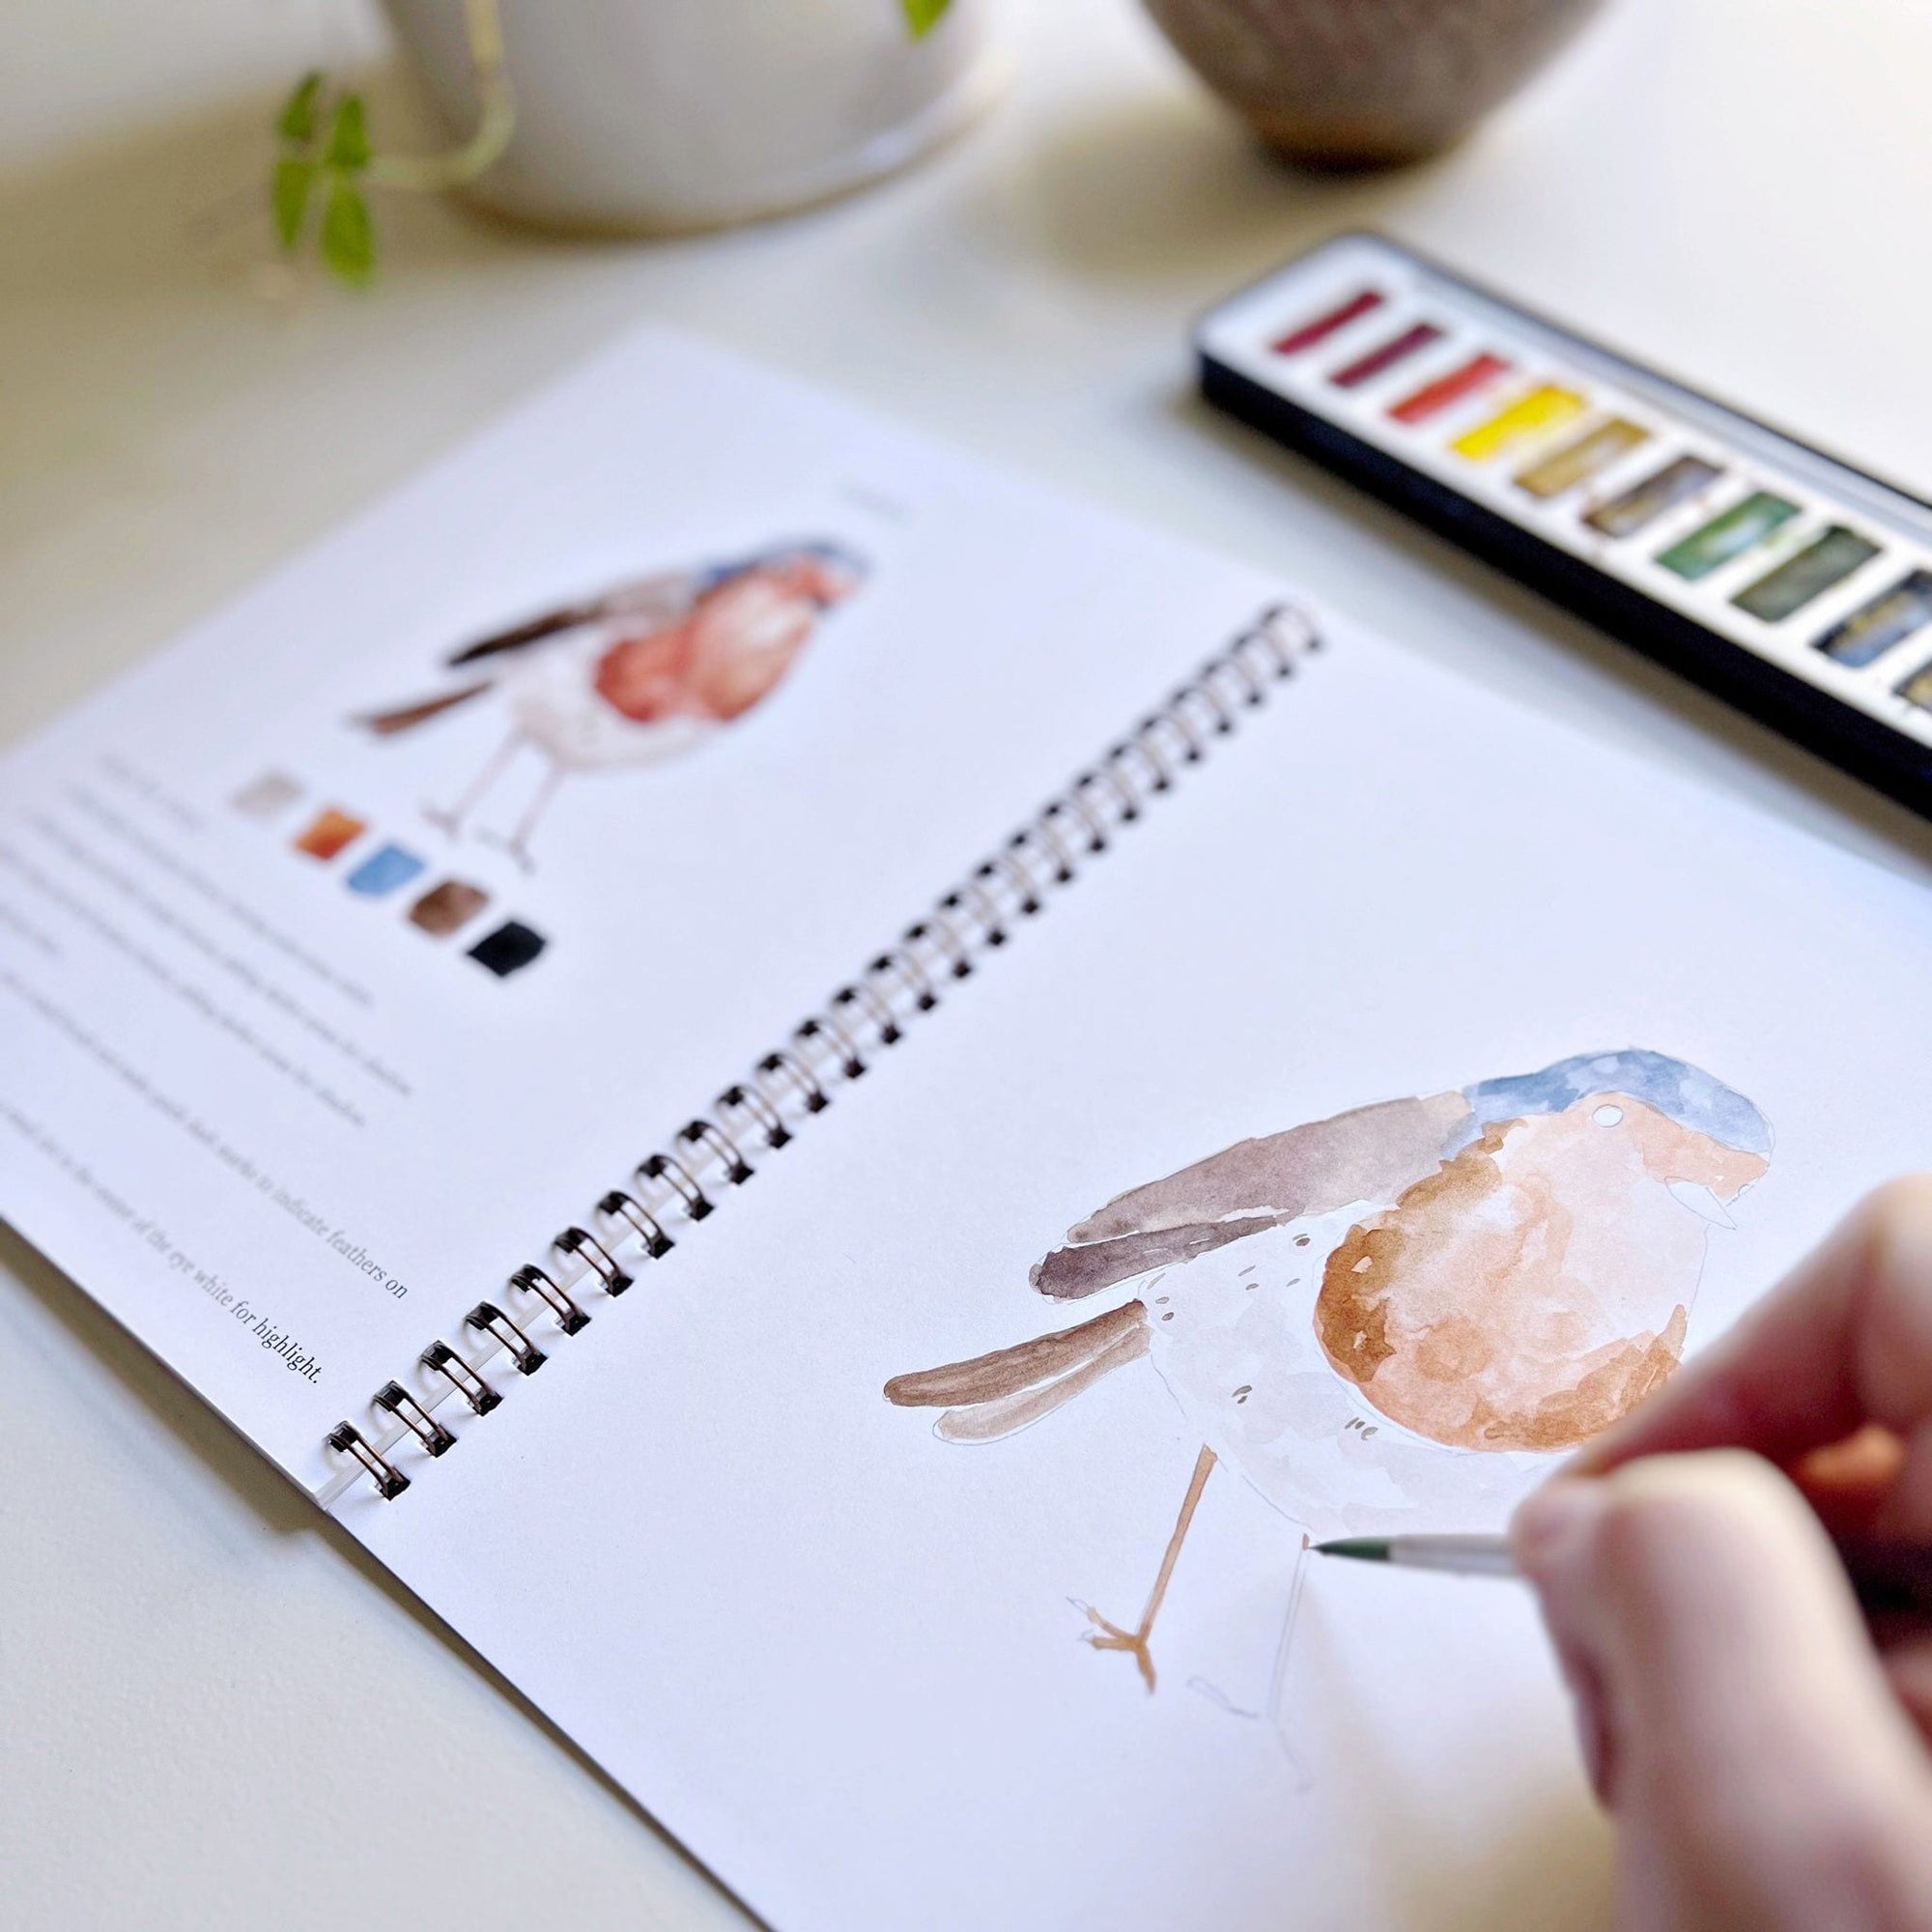 emily lex studio - birds watercolor workbook – Signature Finishes